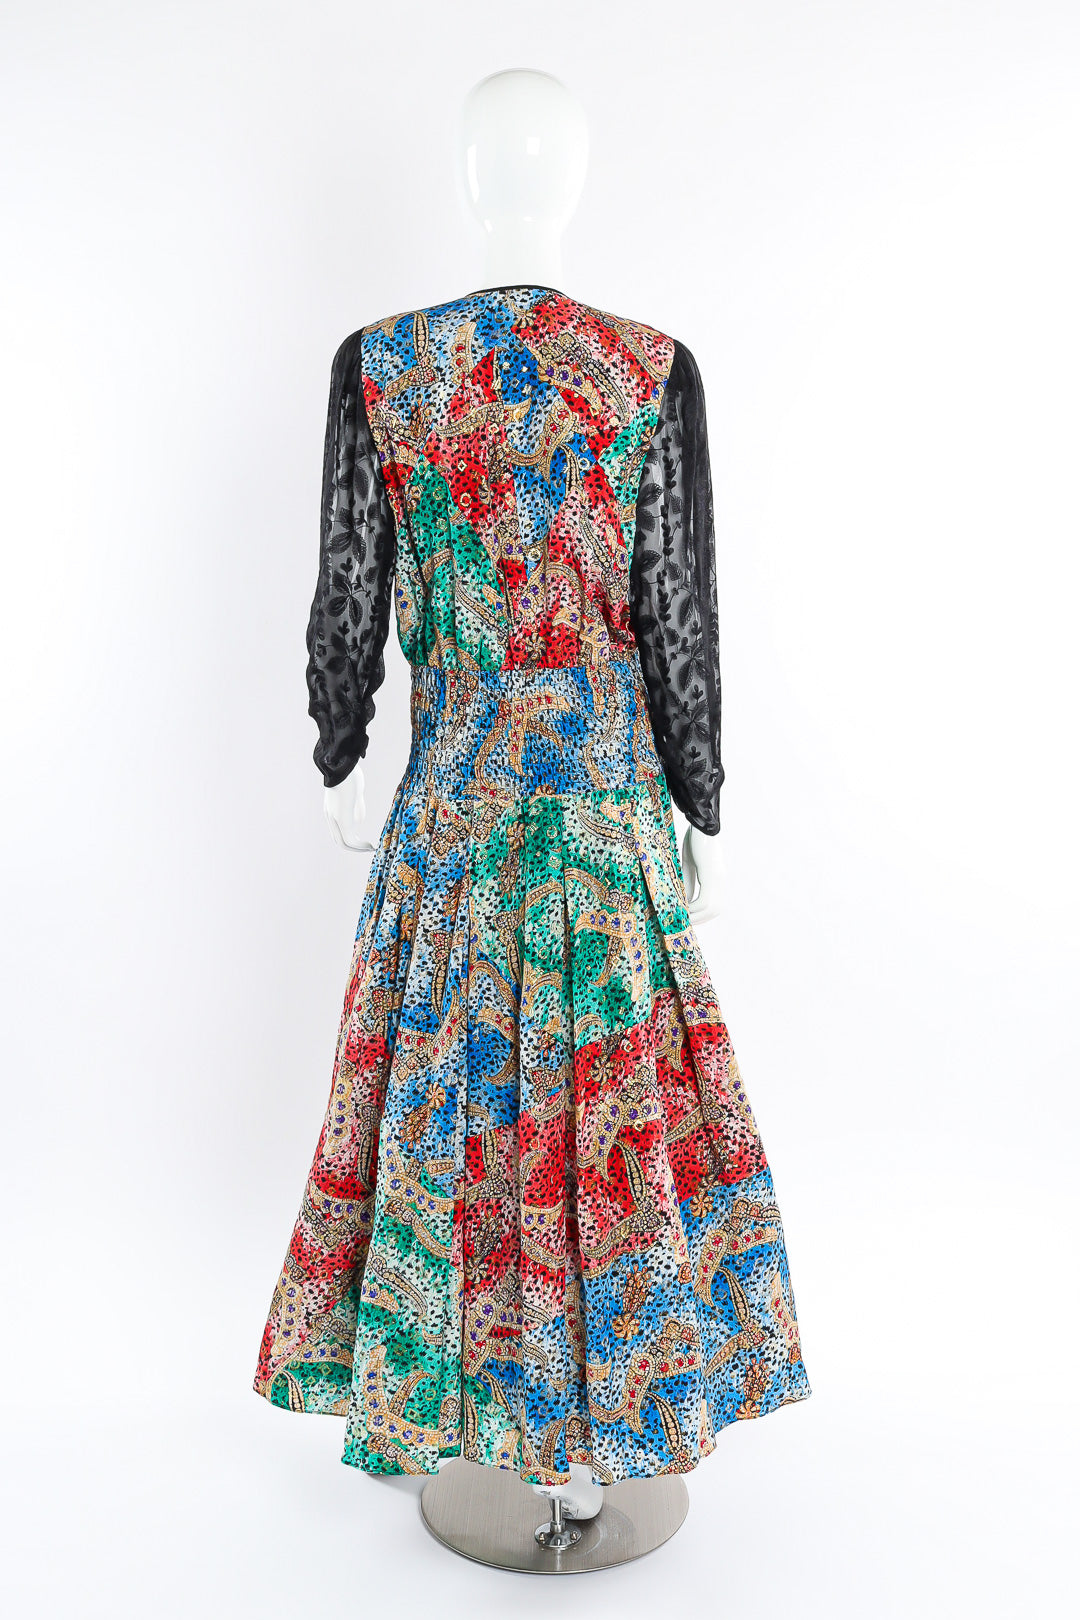 Printed silk dress by Diane Freis mannequin back @recessla